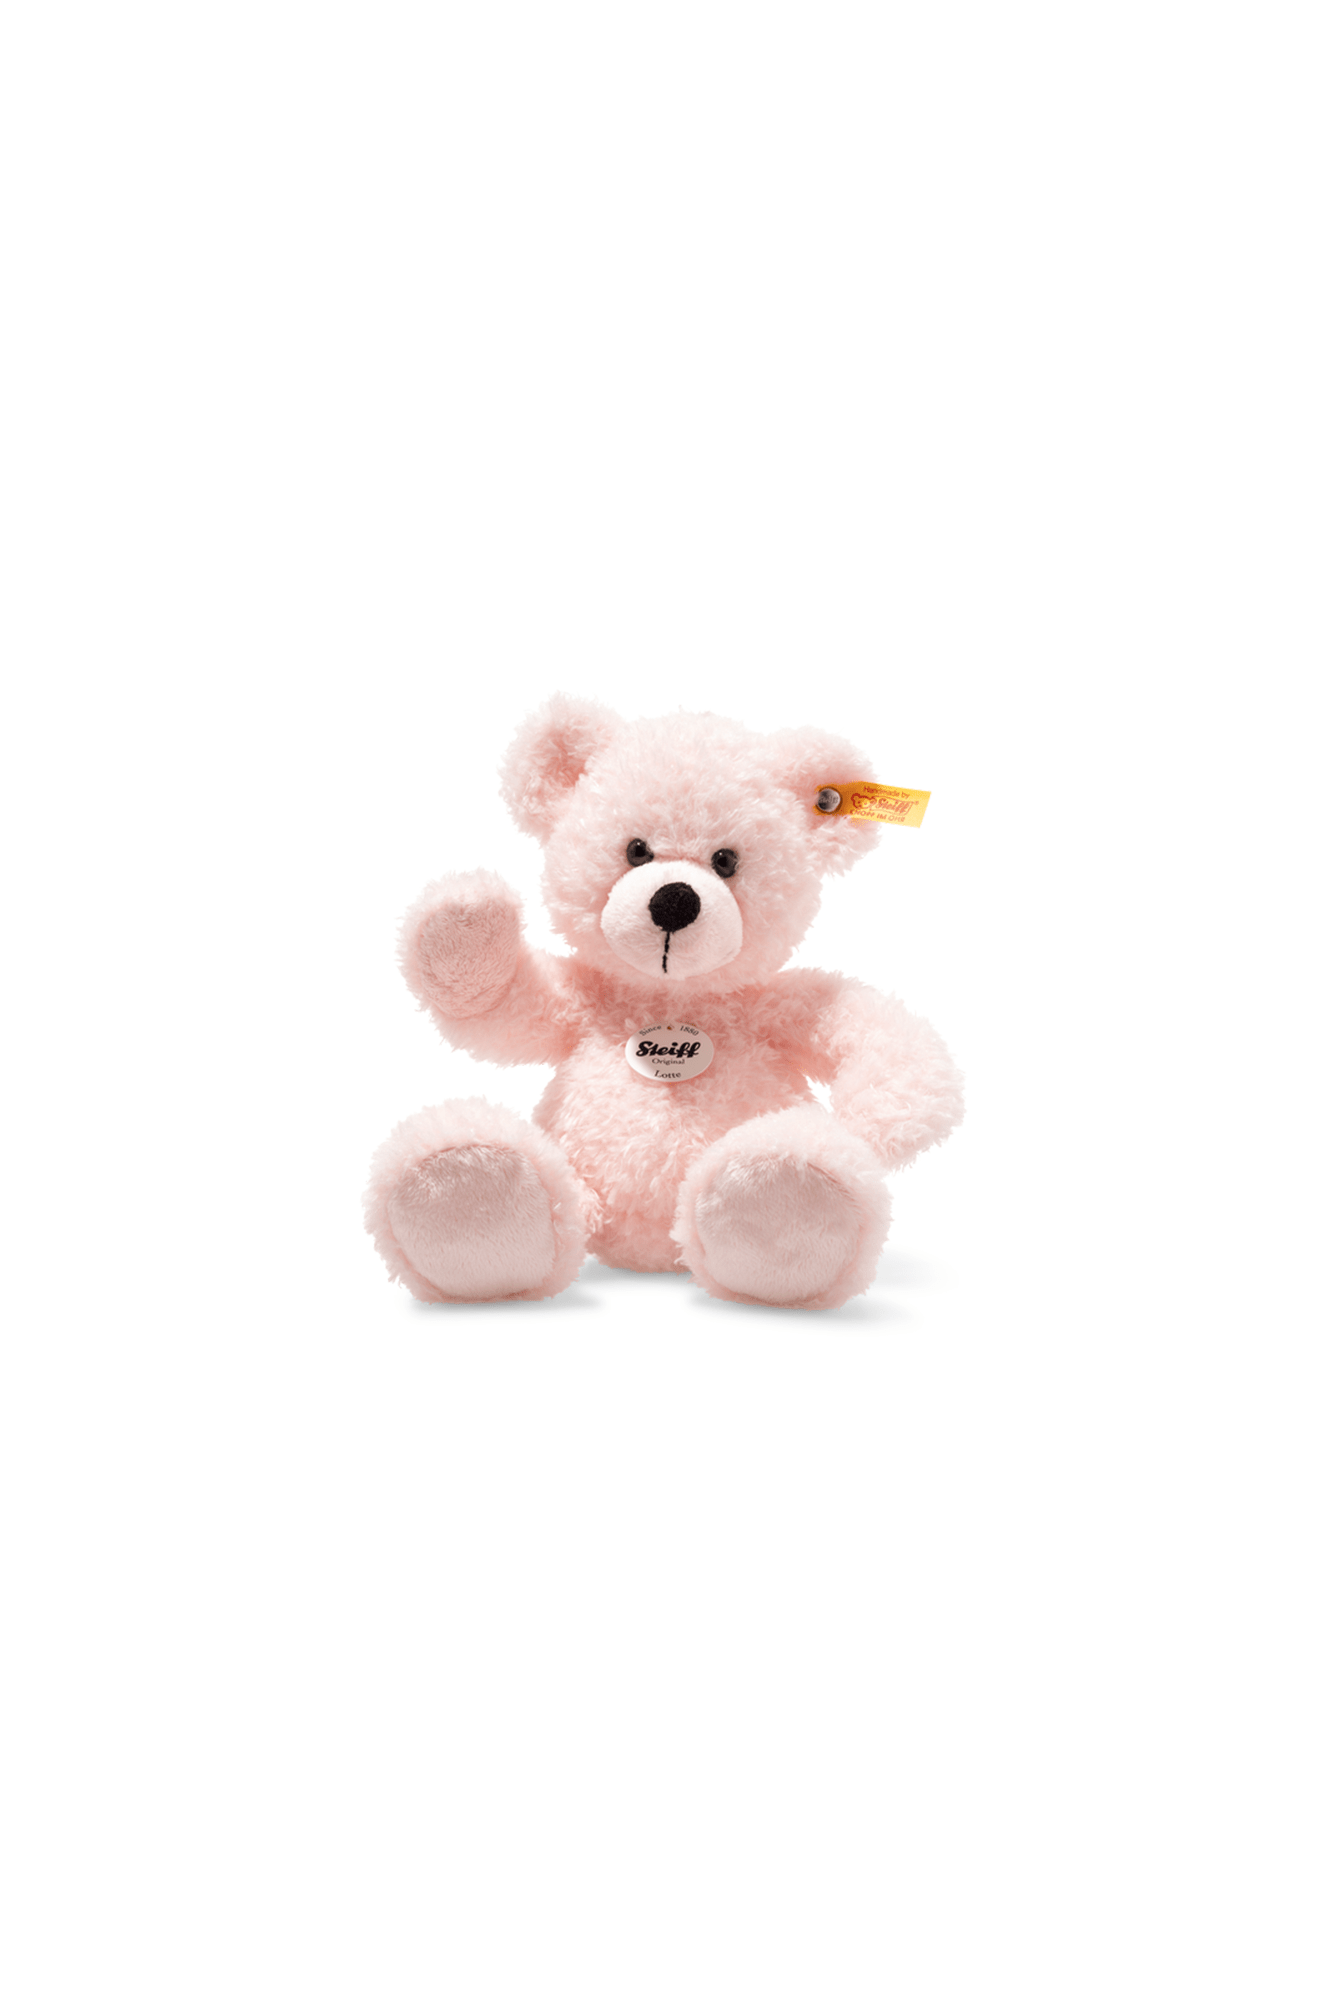 STEIFF Soft Toys Lotte Teddy Bear Plush Pink Medium